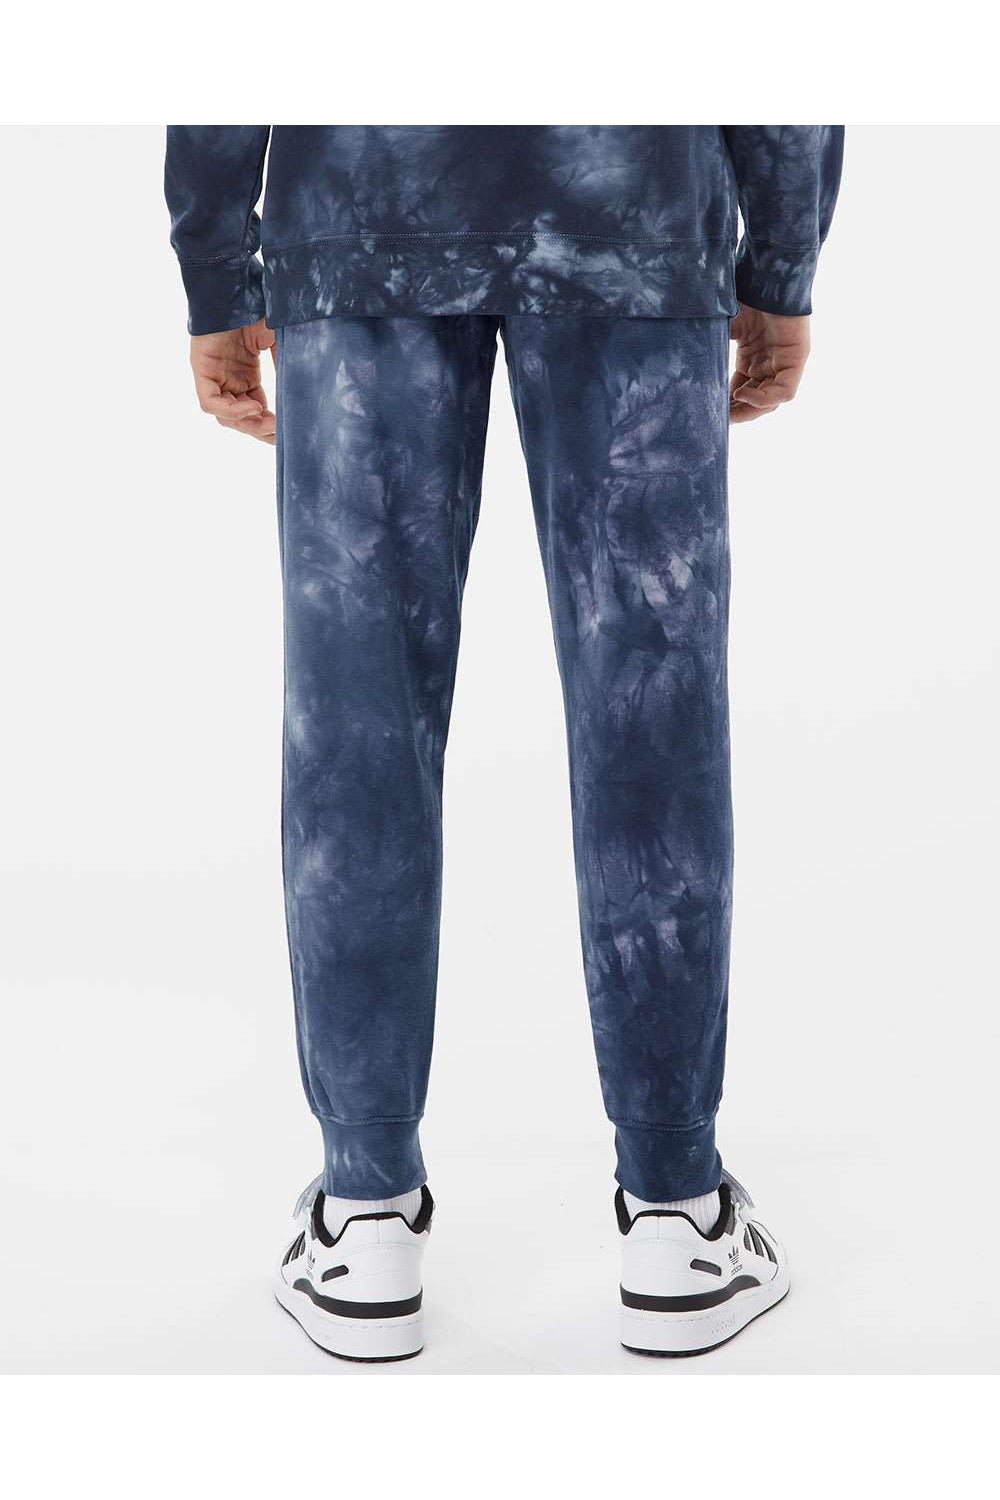 Independent Trading Co. PRM50PTTD Mens Tie-Dye Fleece Sweatpants w/ Pockets Navy Blue Model Back